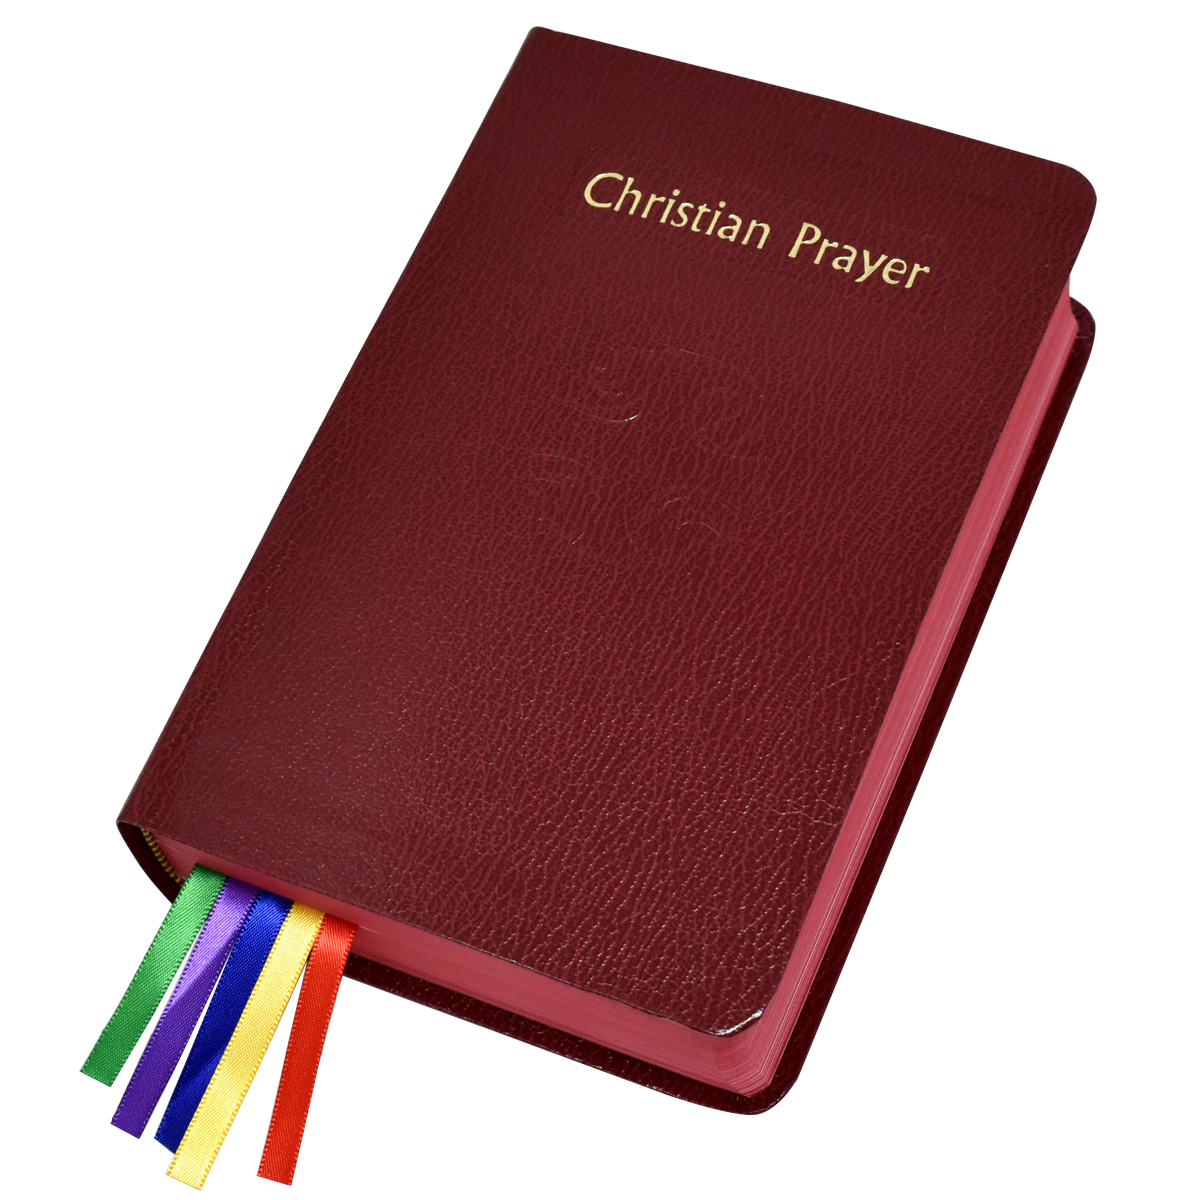 Christian Prayer book